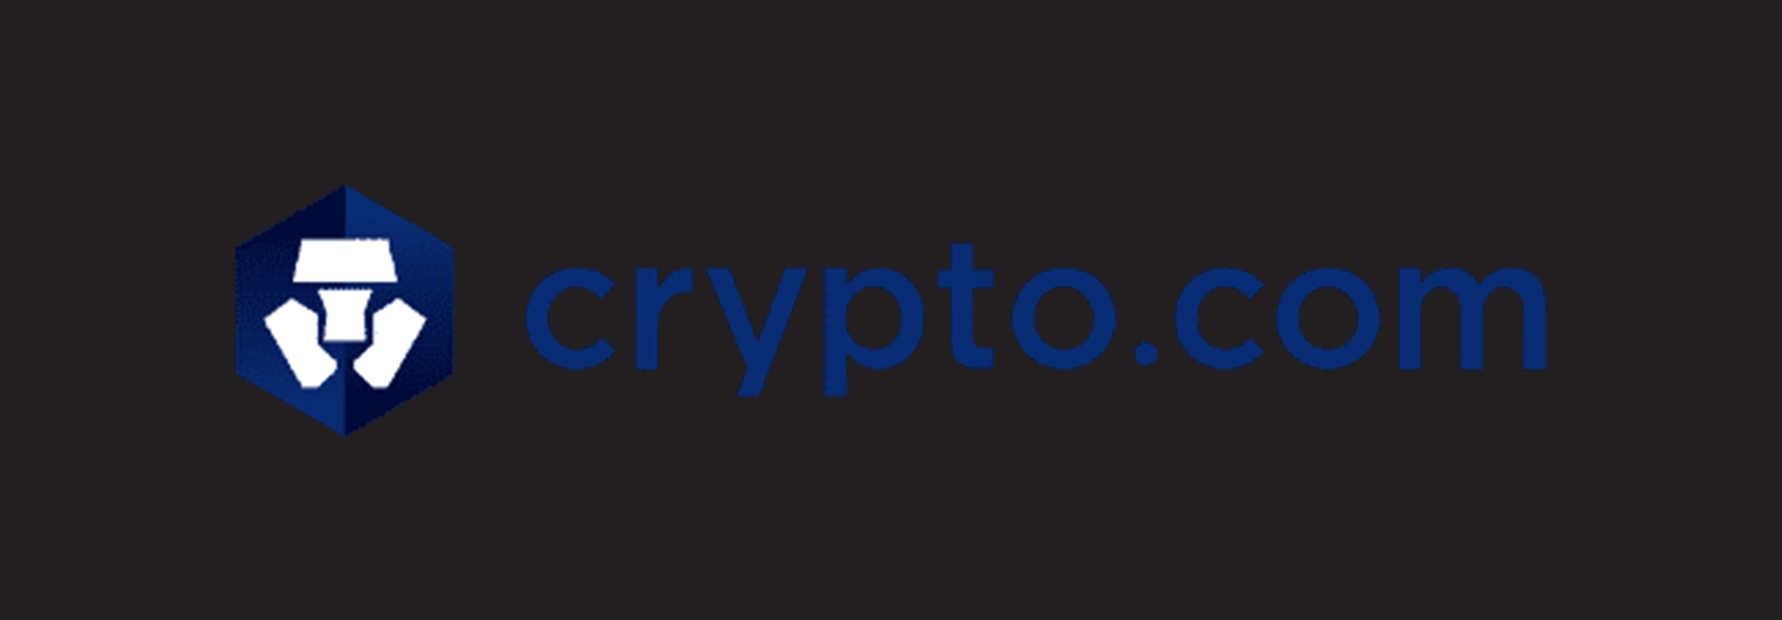 cryptocom-logo.jpg